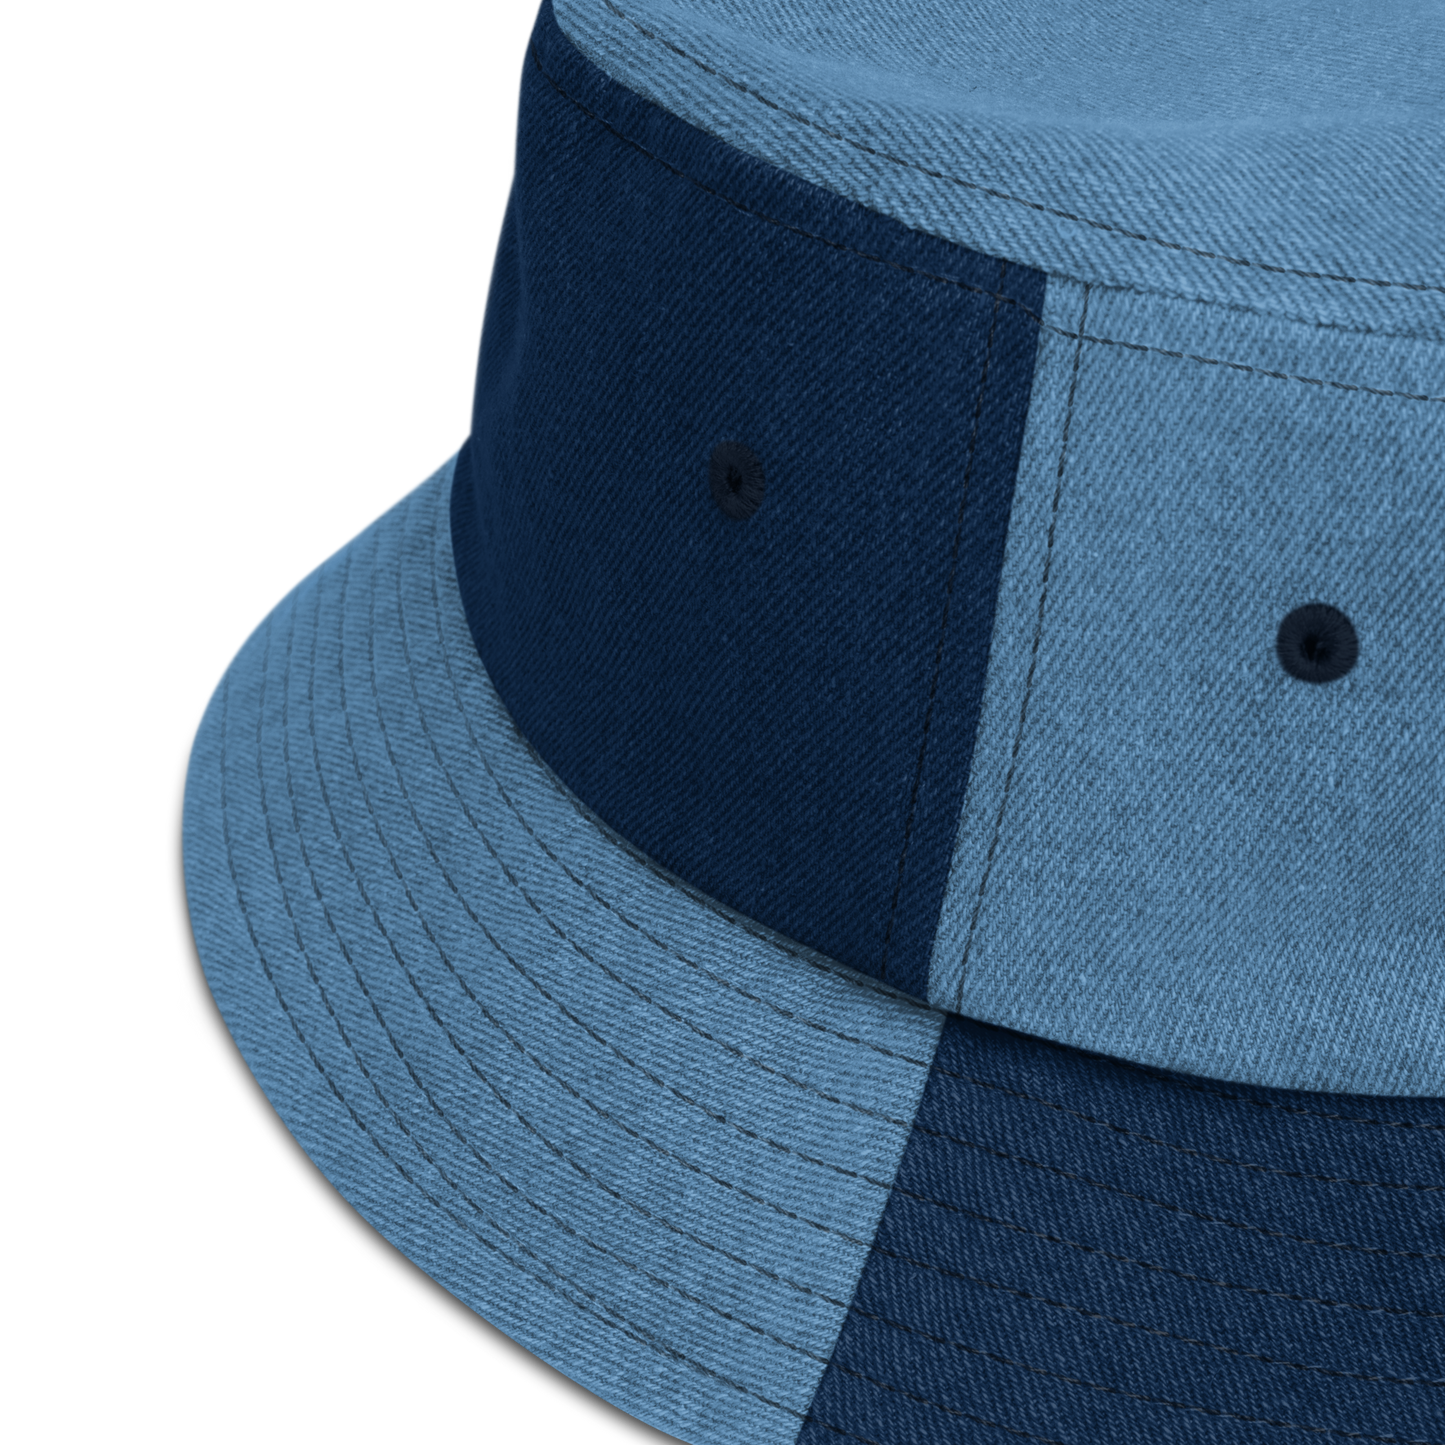 BMFS Sun Denim bucket hat | Flat Embroidery | Inspired Billy Art